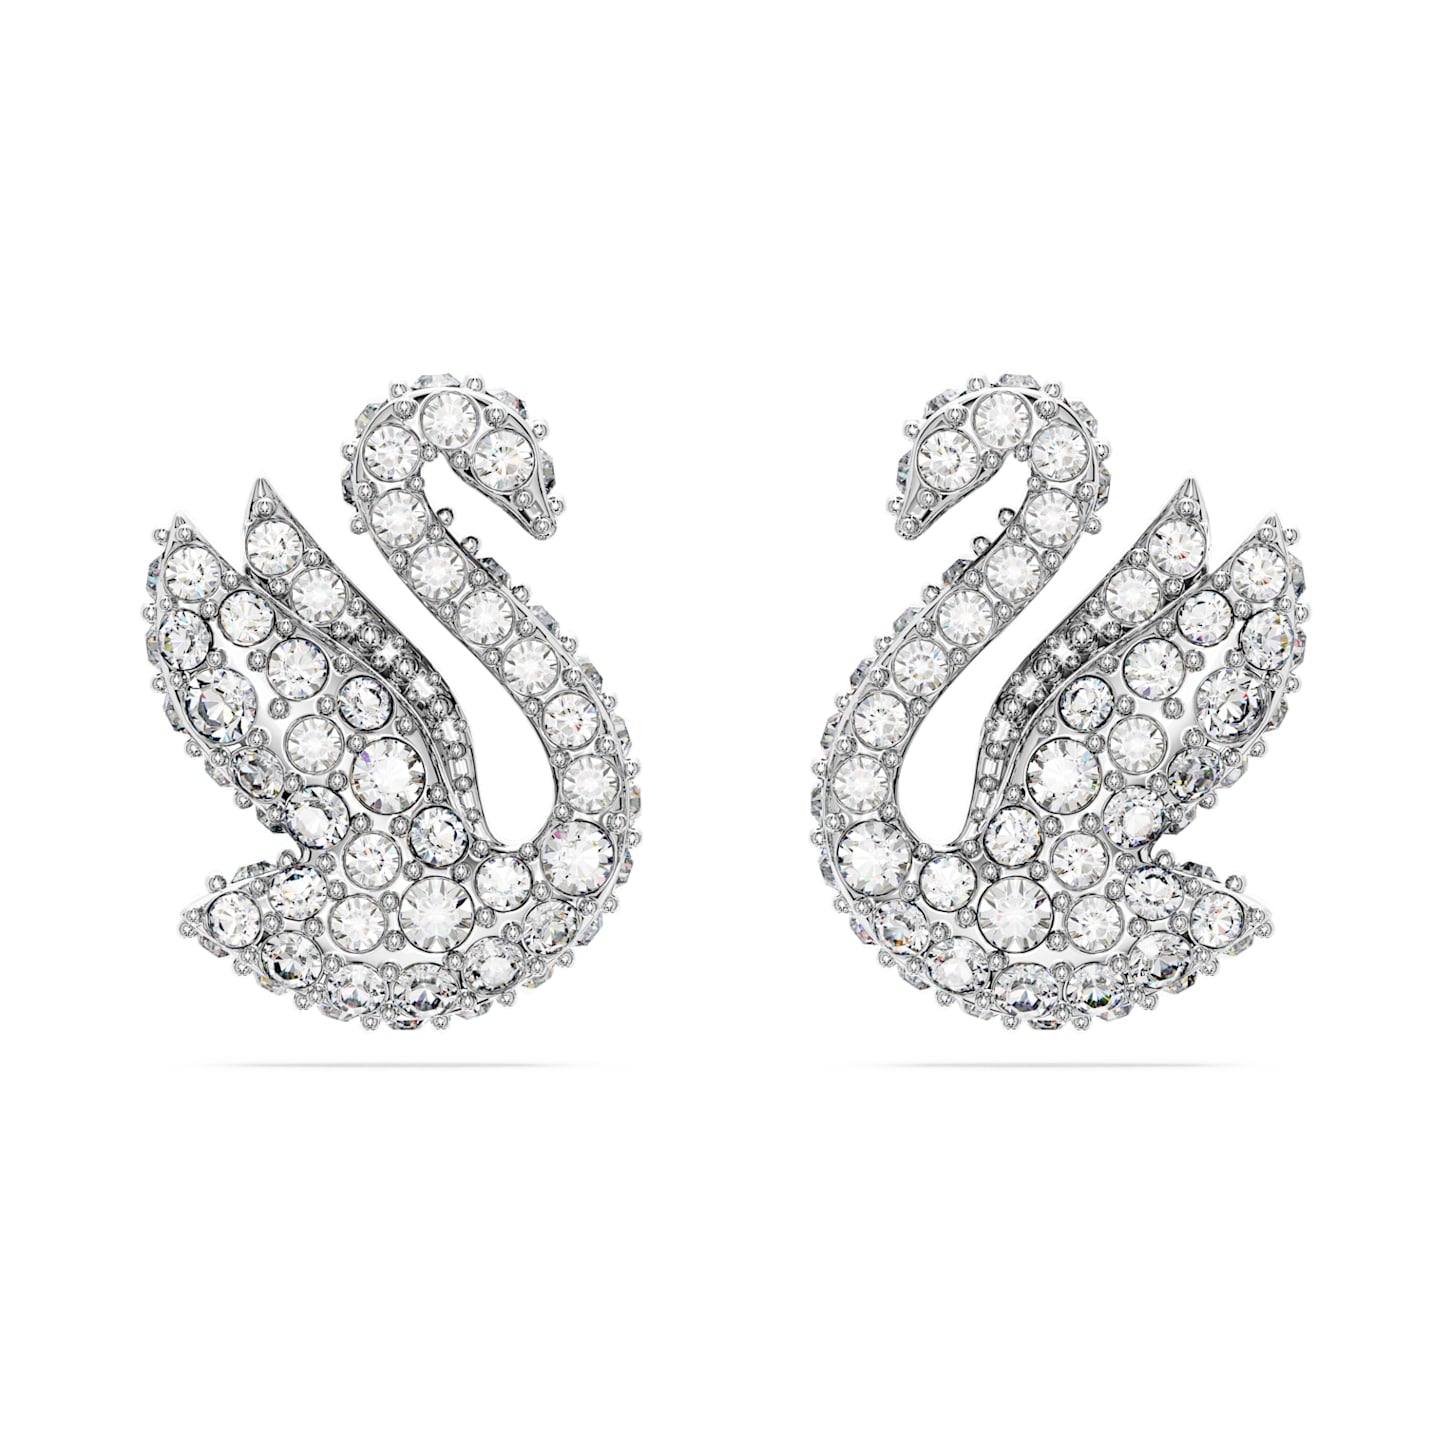 Iconic Swan - White Silver - Stud earrings - Swarovski